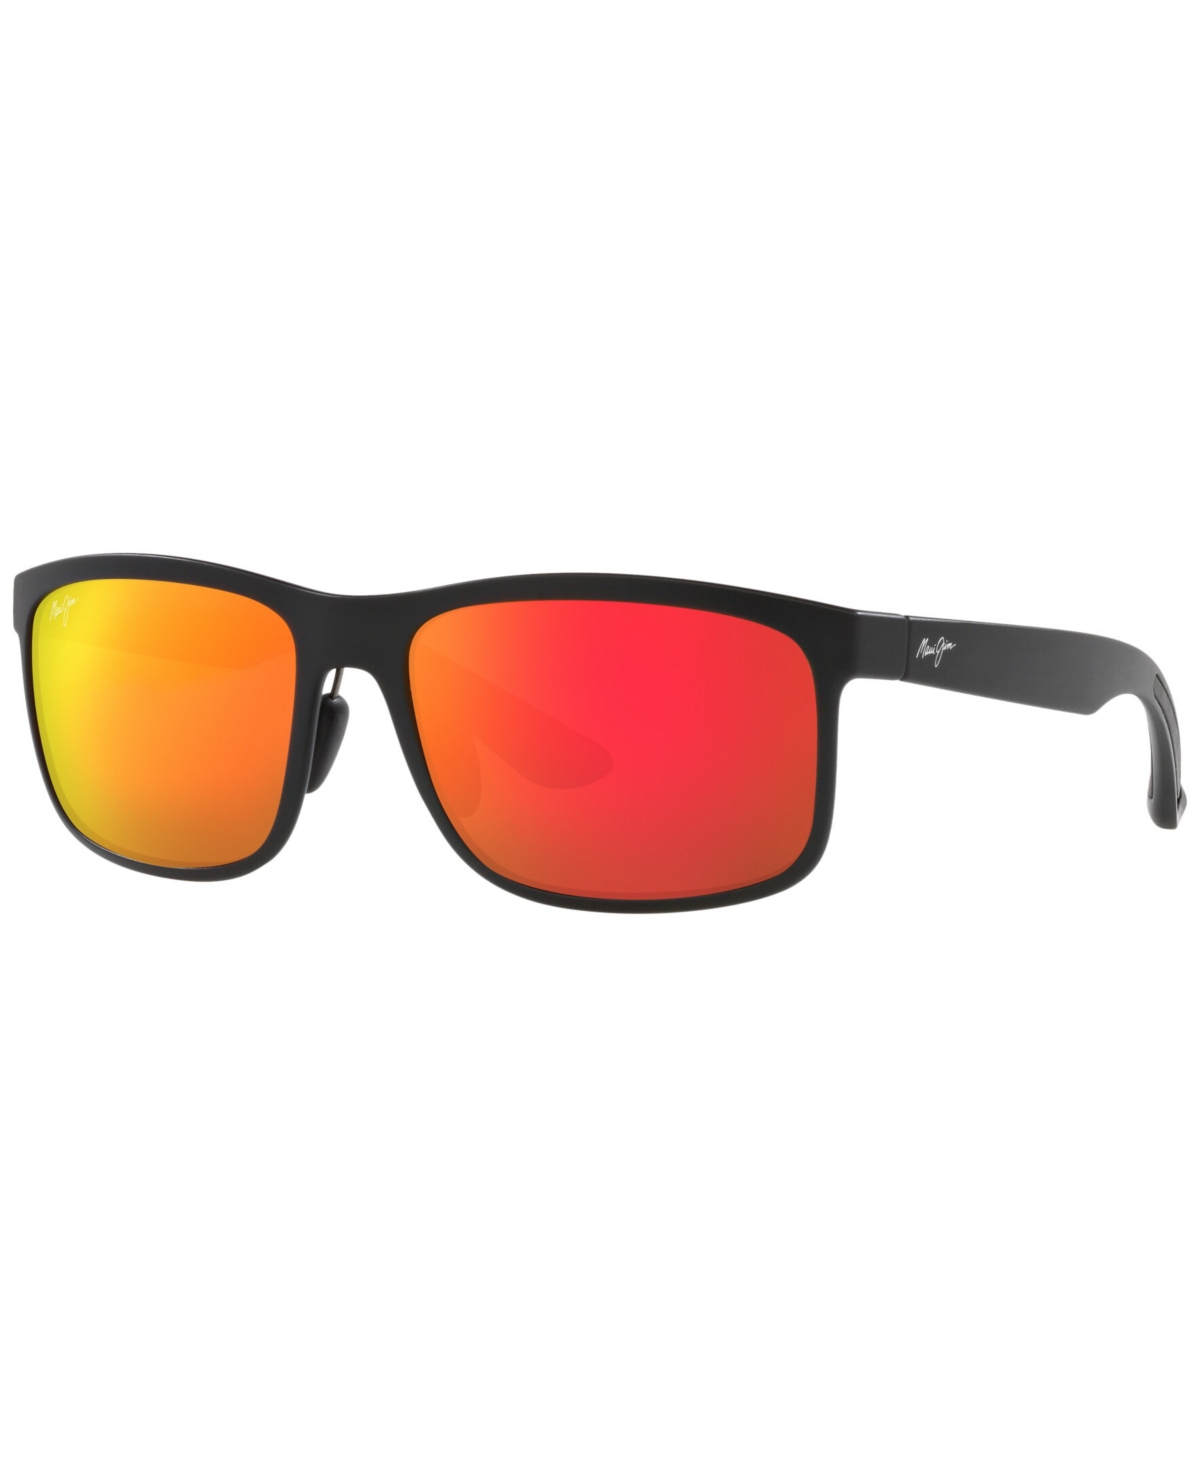 Maui Jim Unisex Sunglasses, Mj000677 Huelo 58 In Black